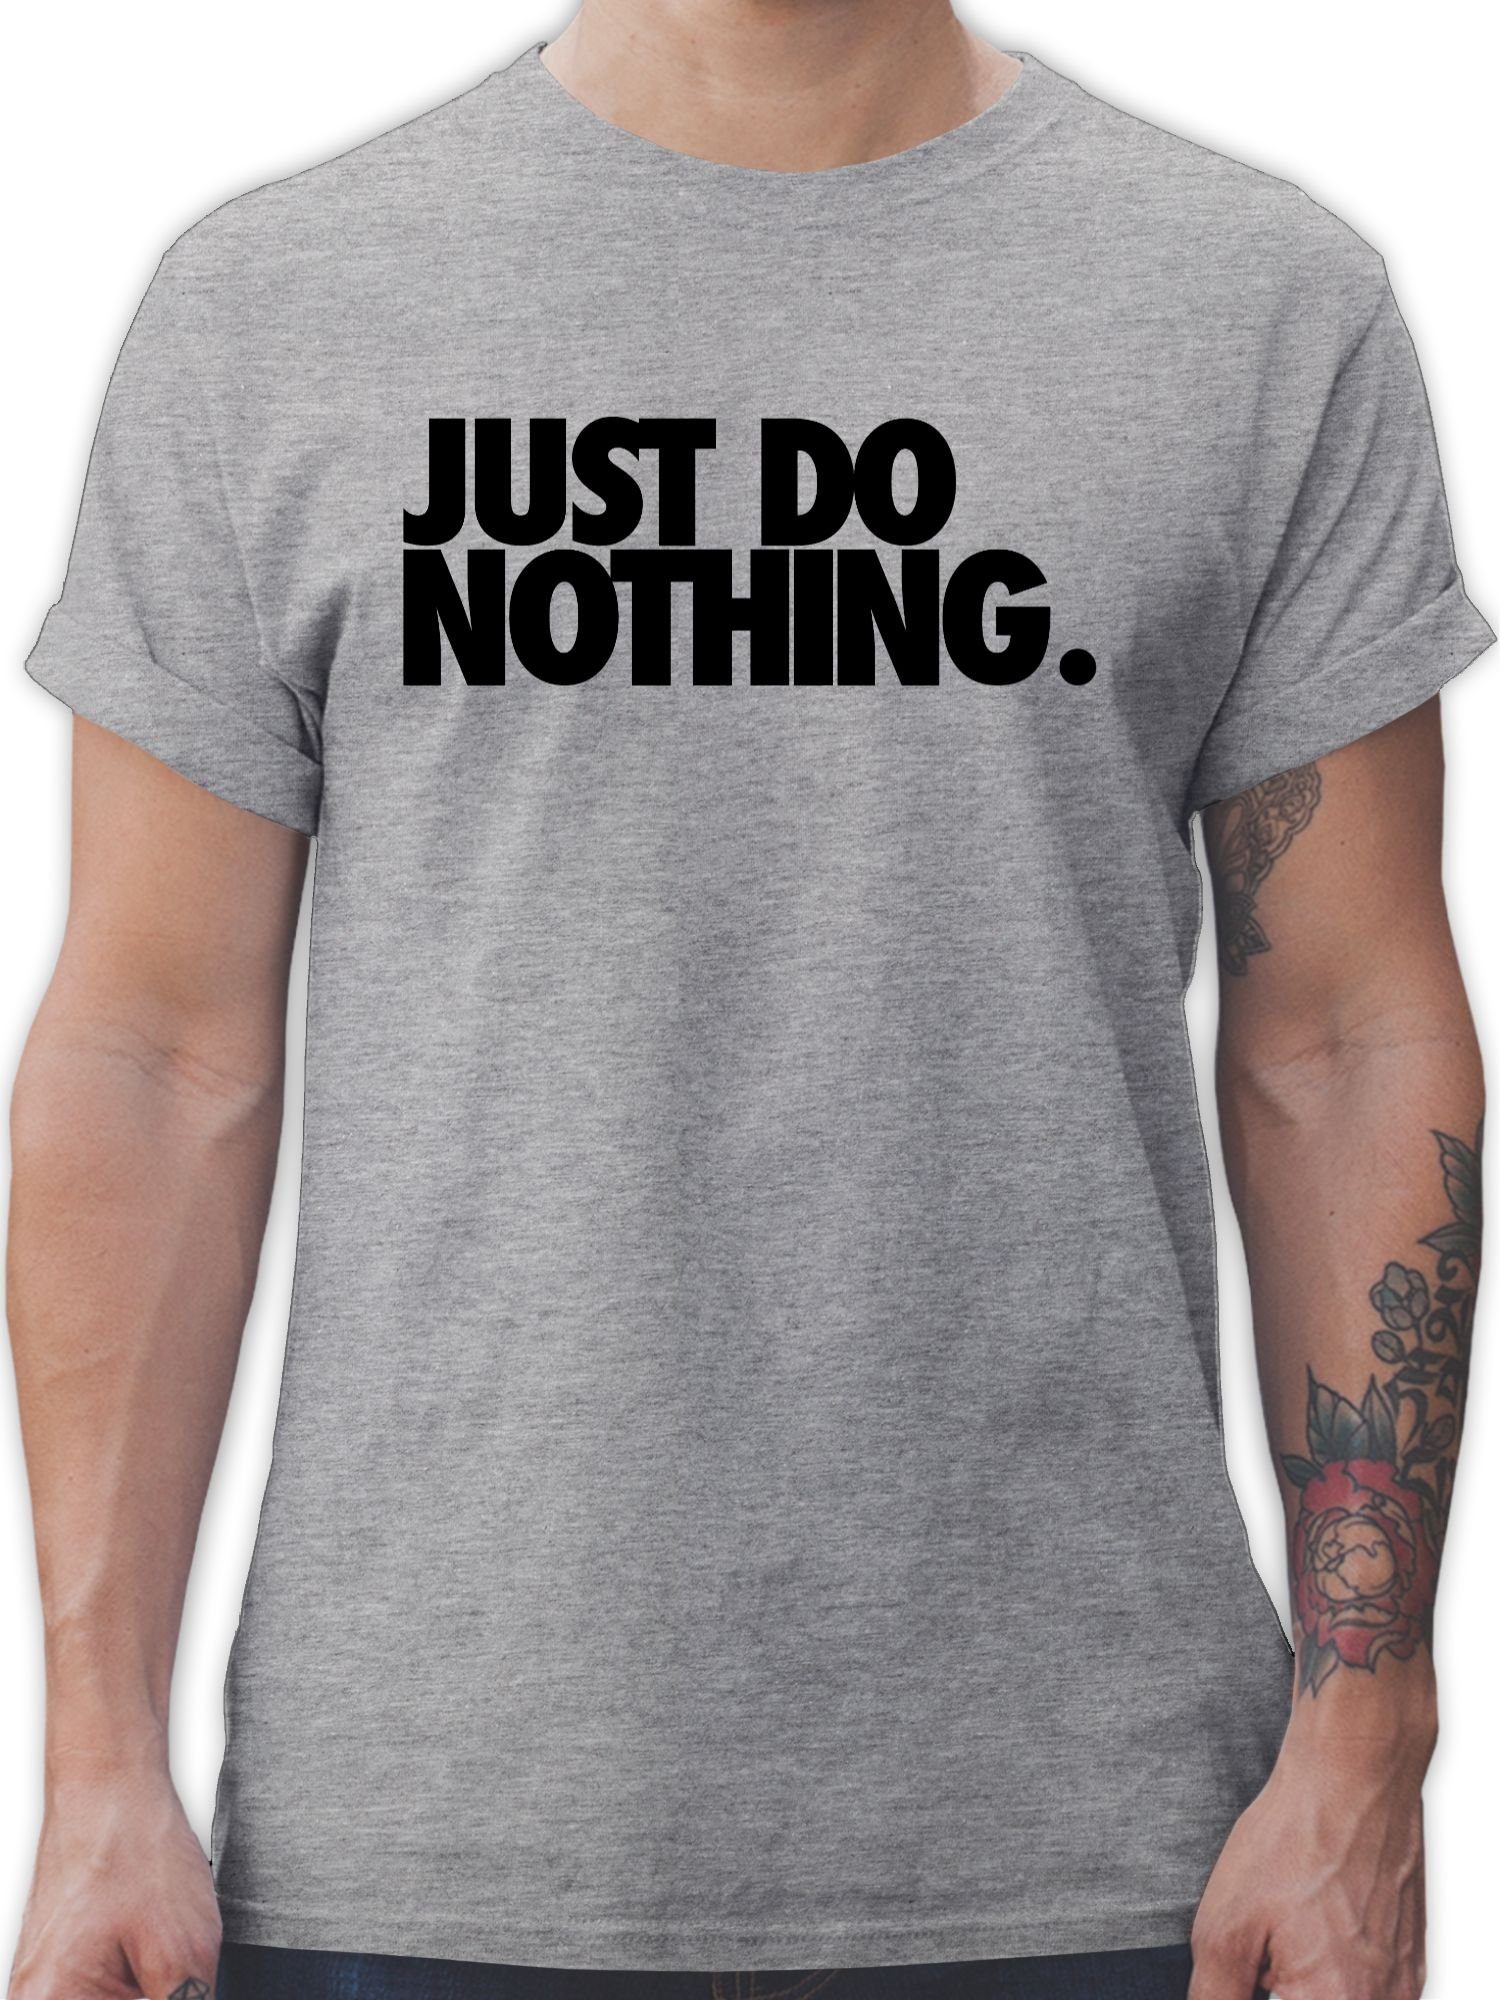 Shirtracer T-Shirt Just do nothing. Sprüche Statement 1 Grau meliert